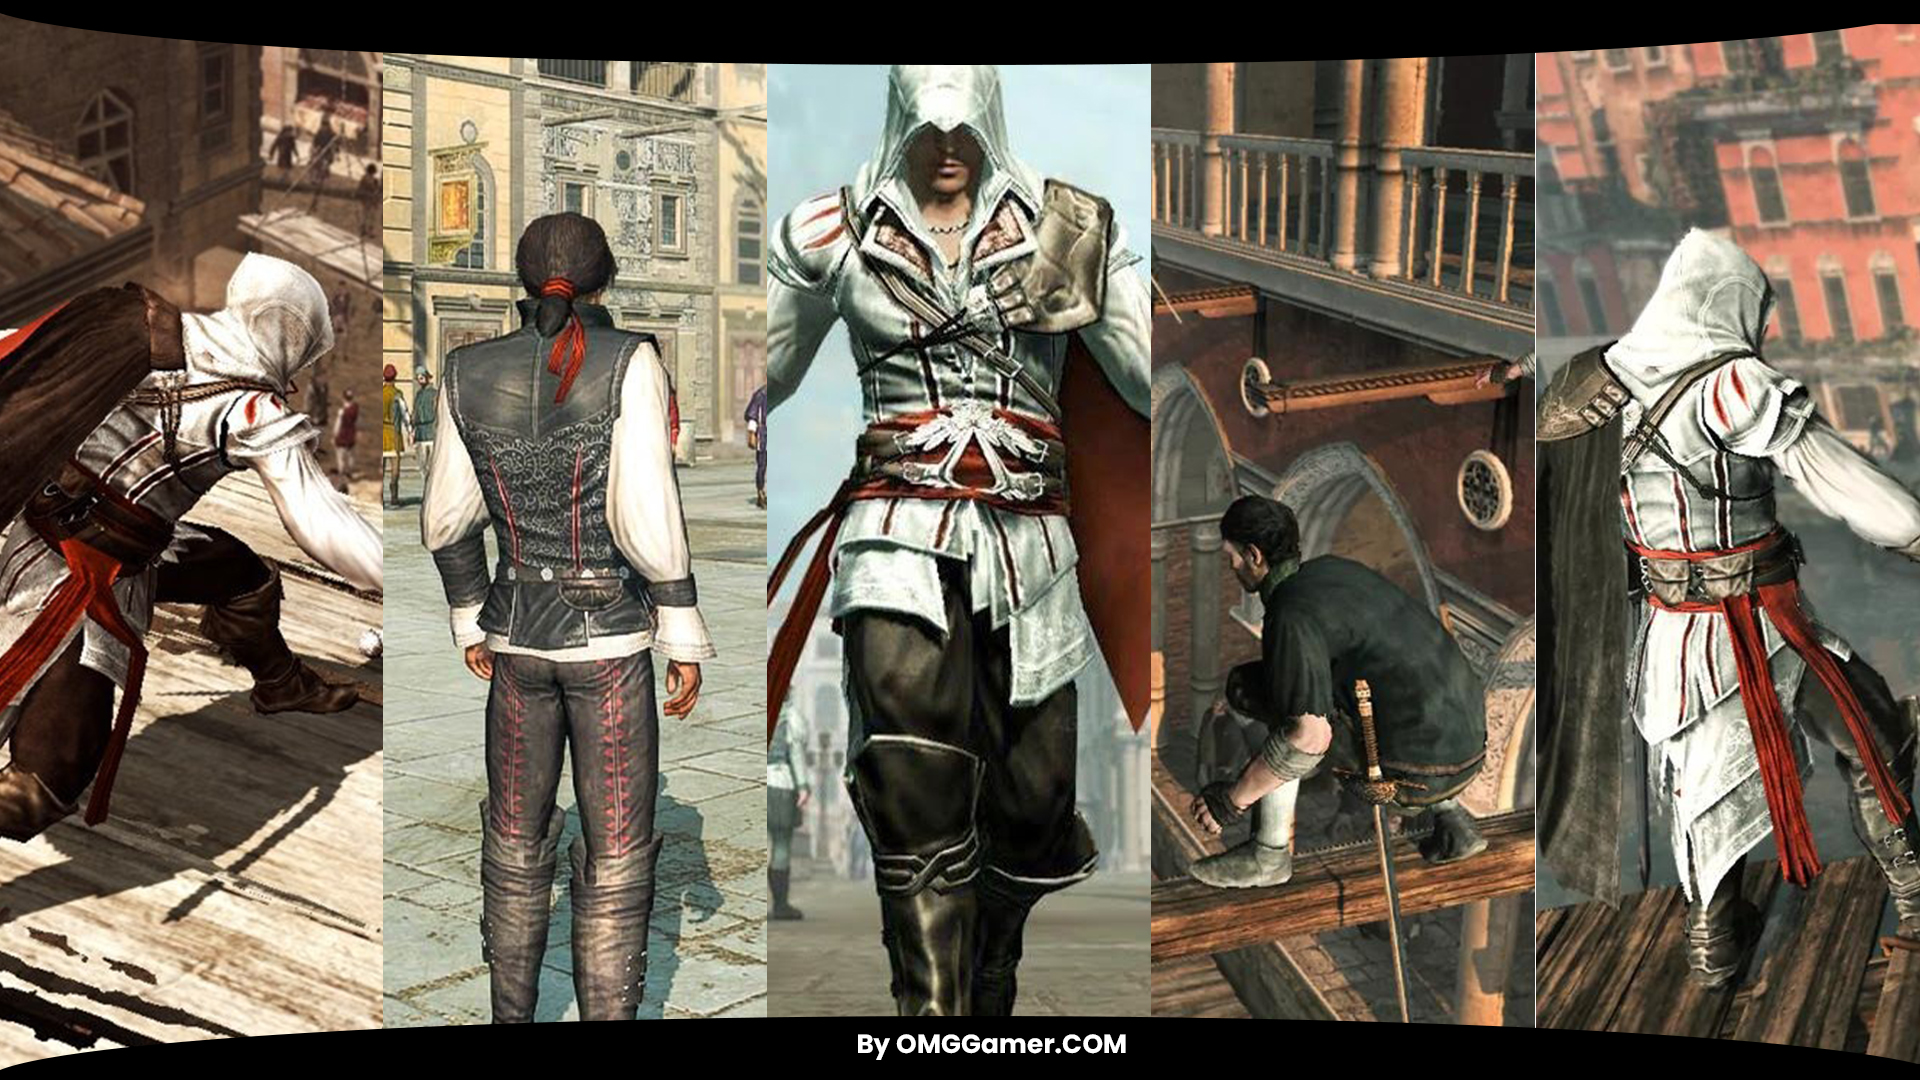 Assassin’s Creed II (2009)